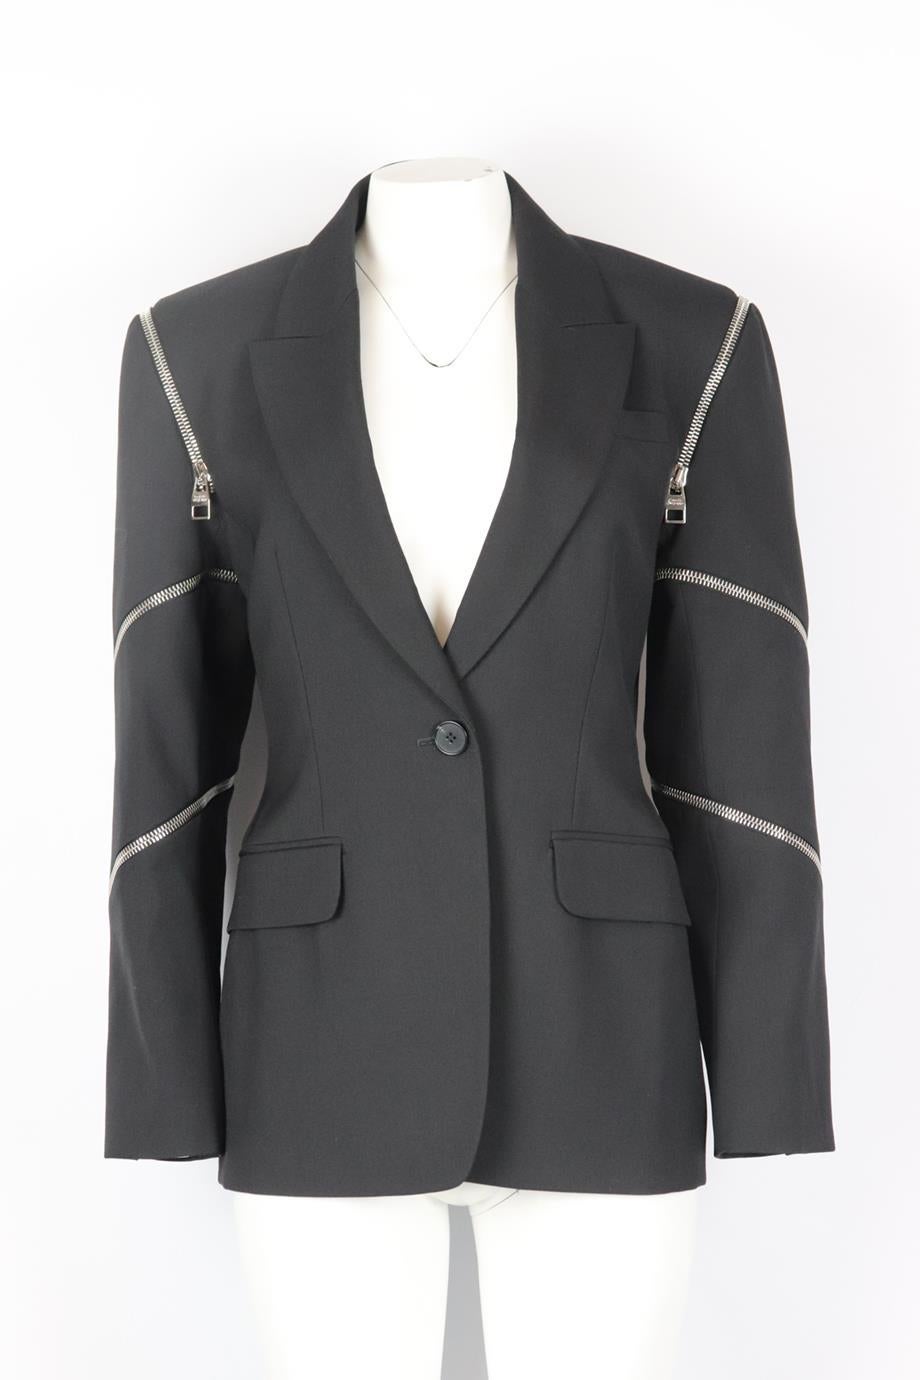 Alexander McQueen zip detailed wool blazer. Black. Long sleeve, v-neck. Button fastening at front. 100% Wool; lining: 100% viscose. Size: IT 48 (UK 16, US 12, FR 44). Shoulder to shoulder: 17.5 in. Bust: 34 in. Waist: 34 in. Hips: 40 in. Length: 28